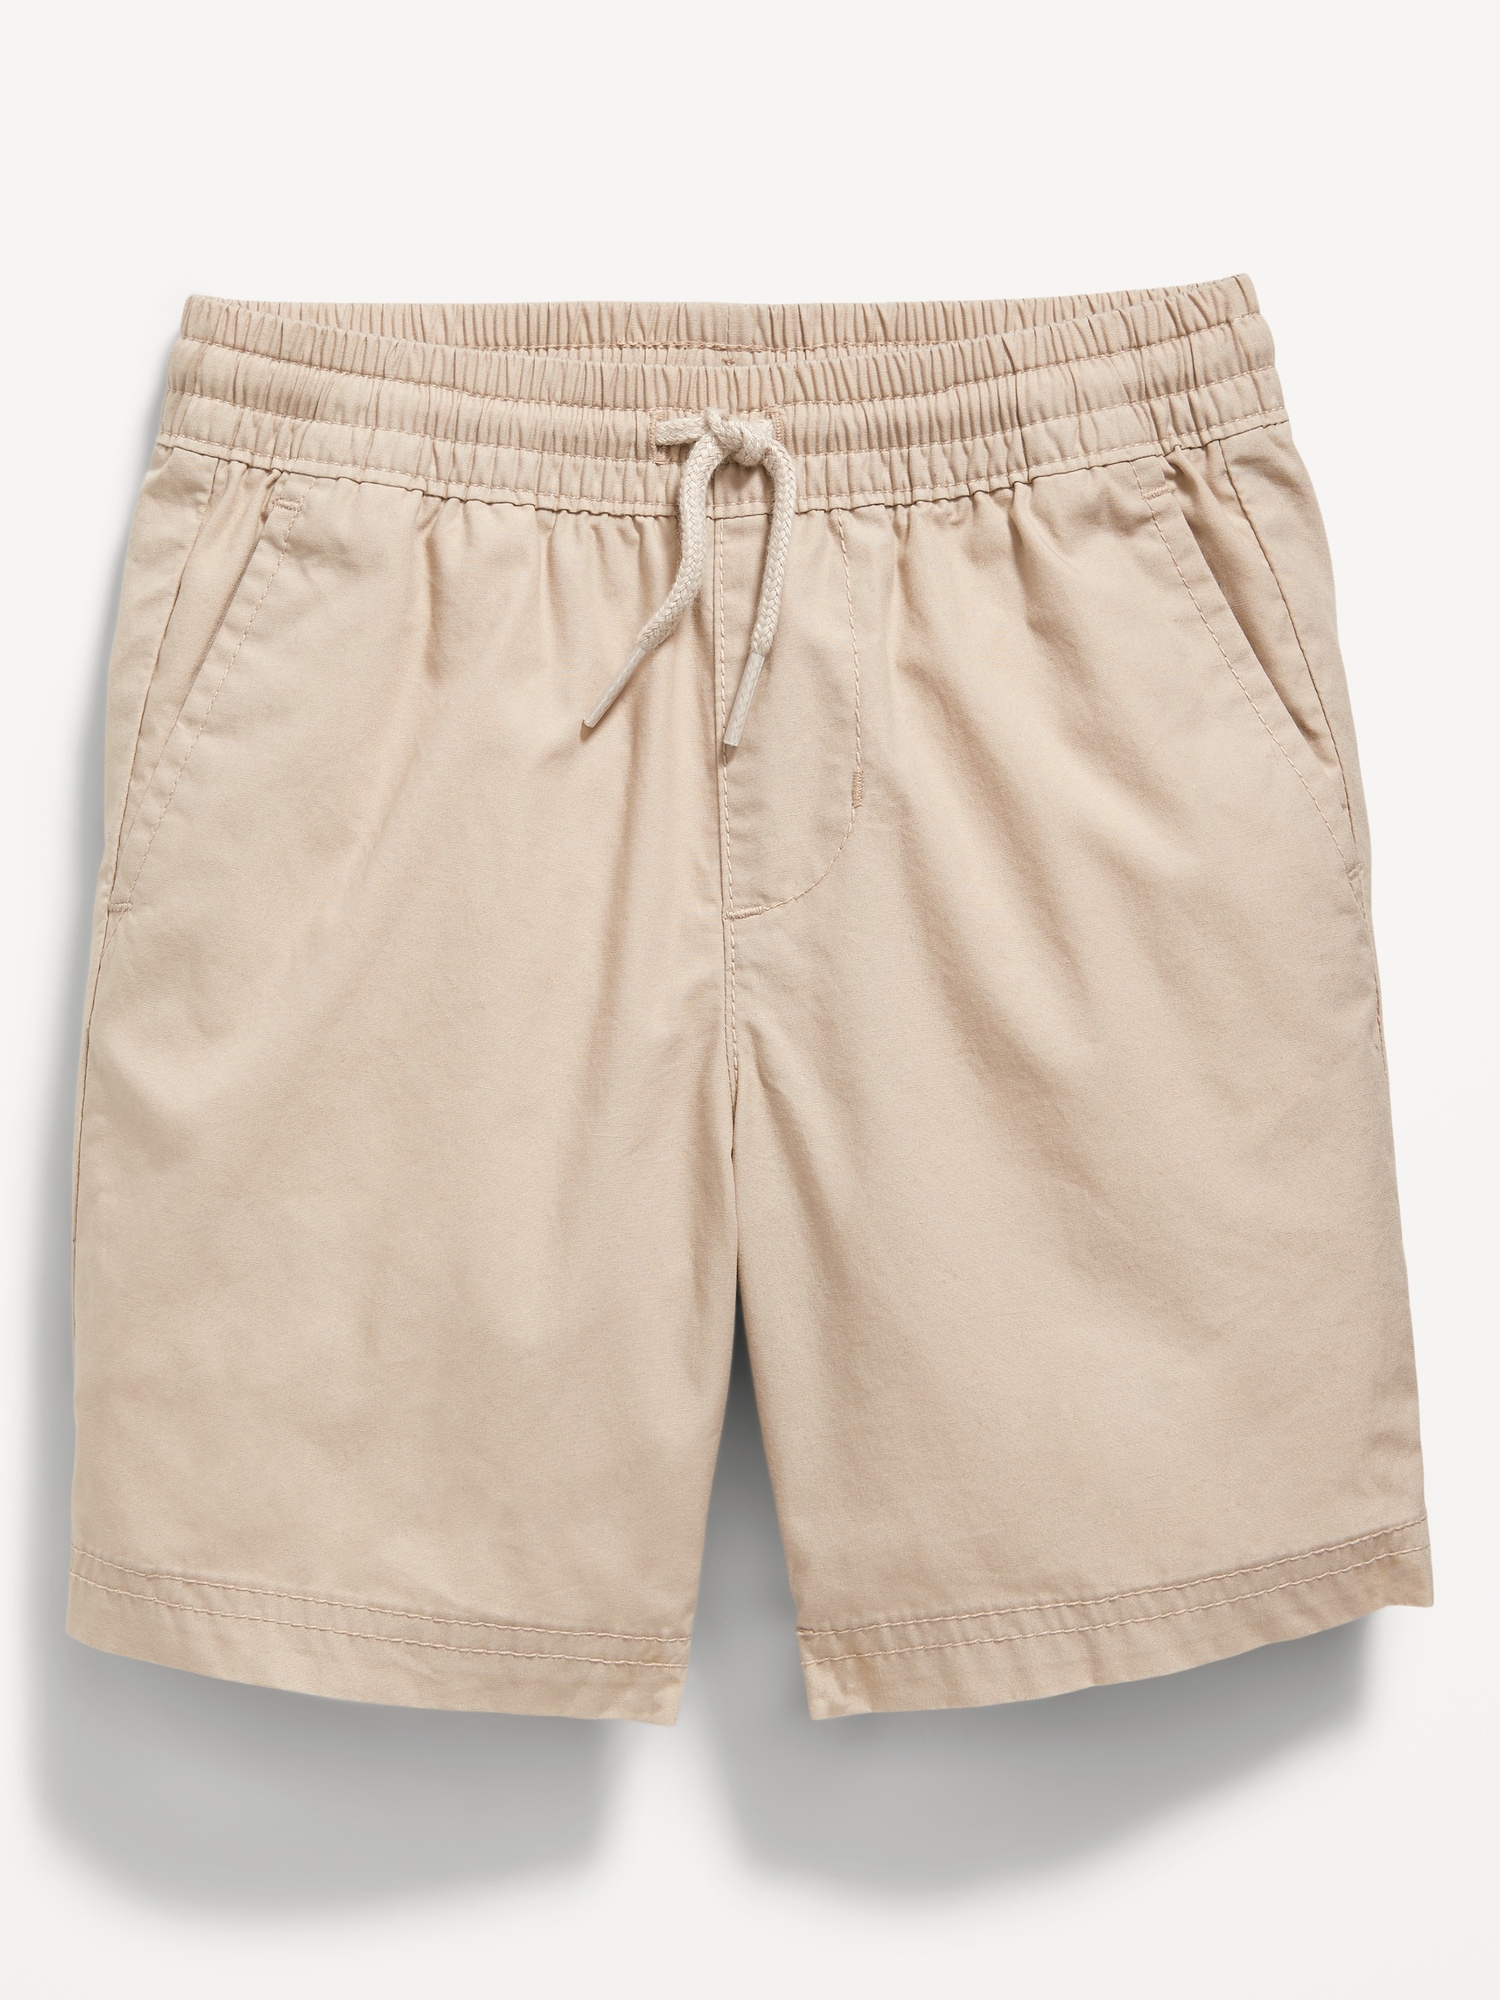 Functional-Drawstring Shorts for Toddler Boys Hot Deal